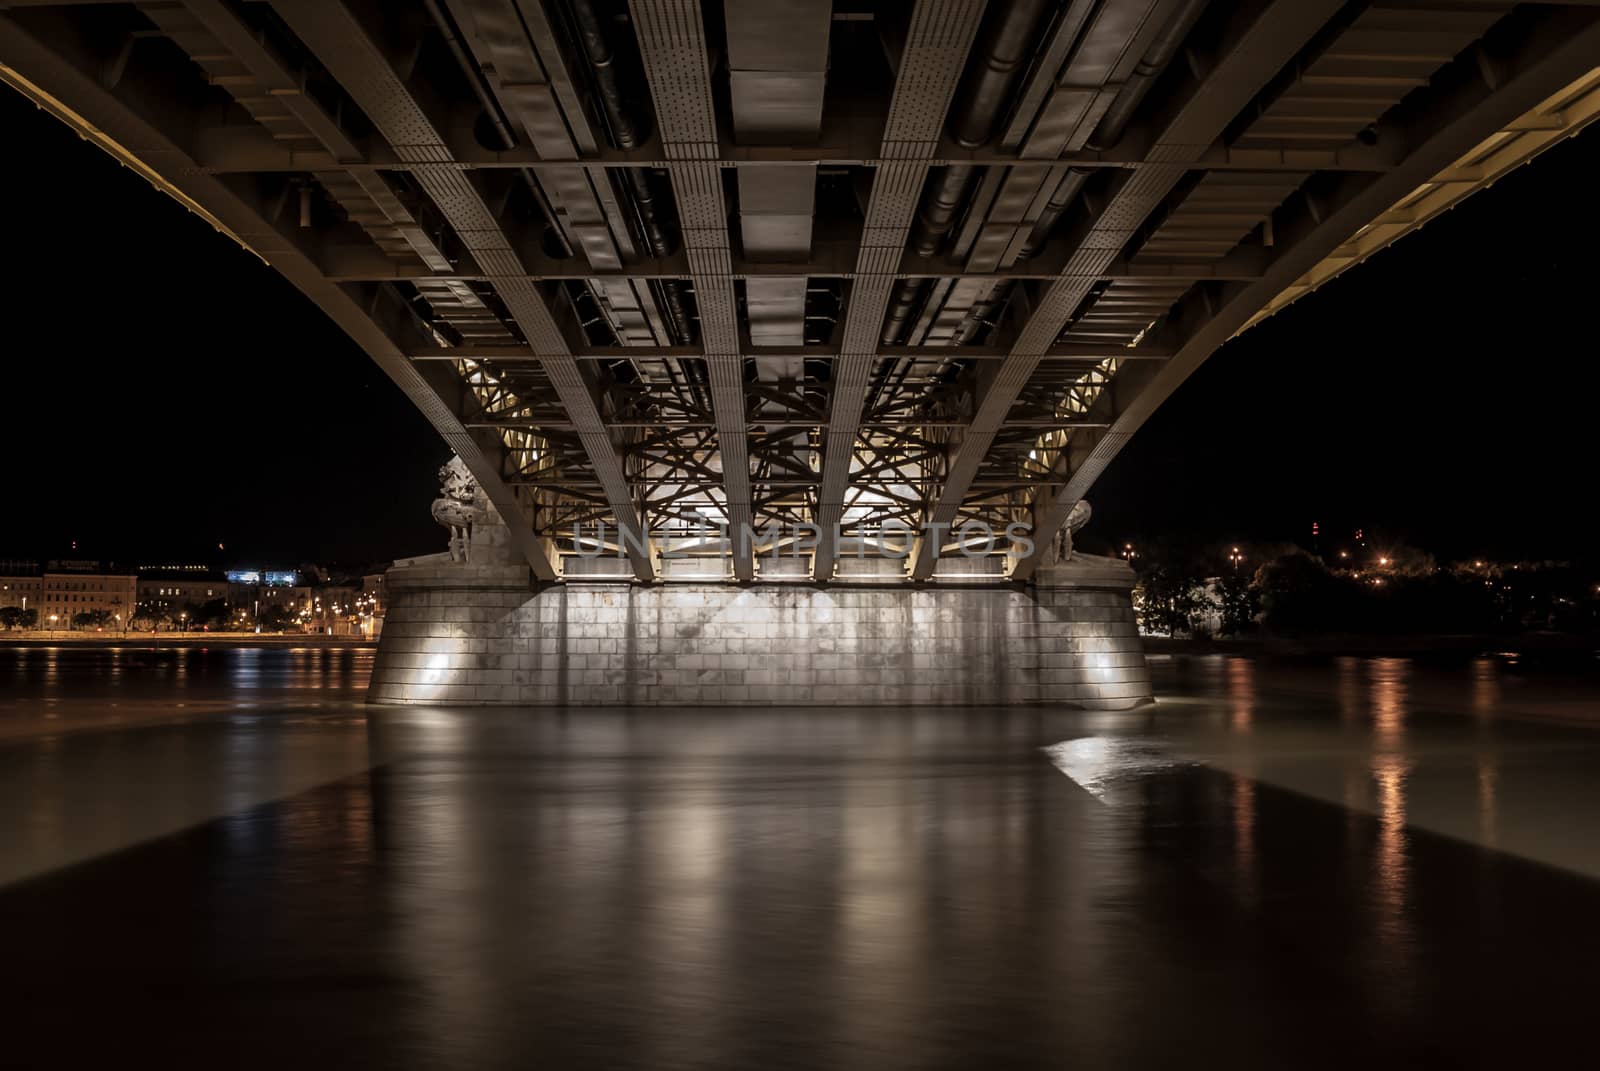 under the margit bridge in budapest, hungaria during the night